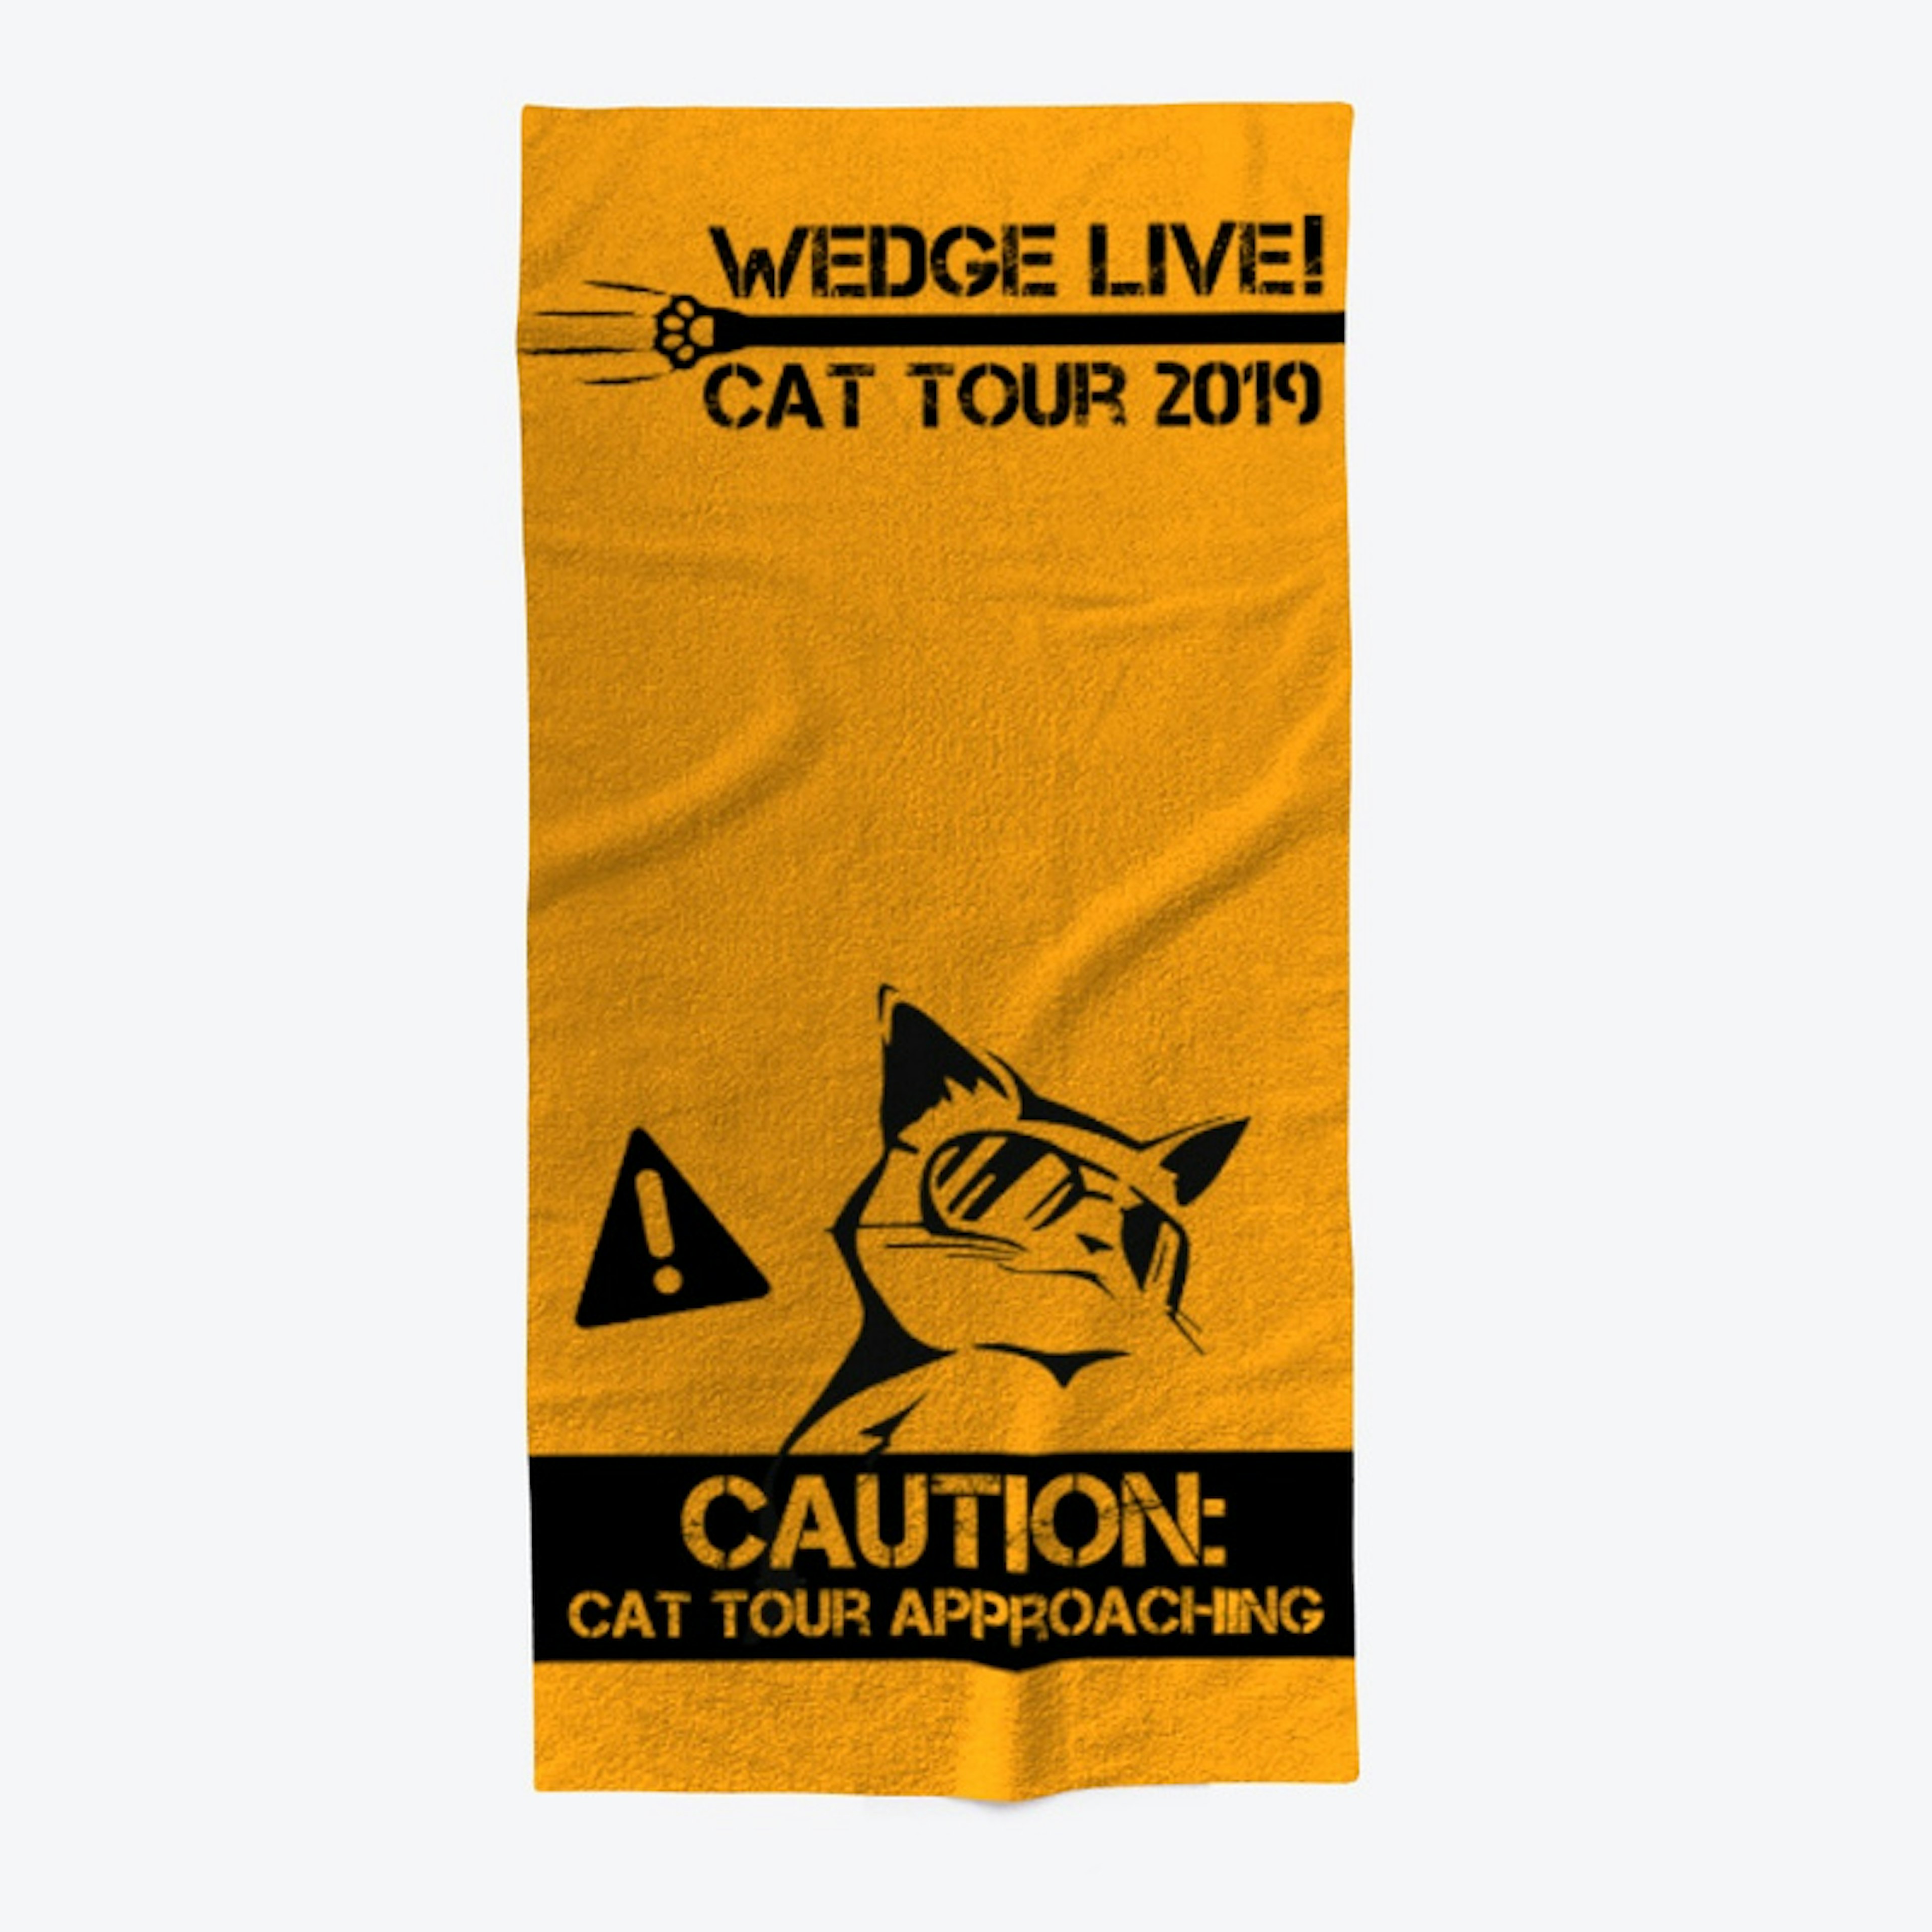 Cat Tour 2019!